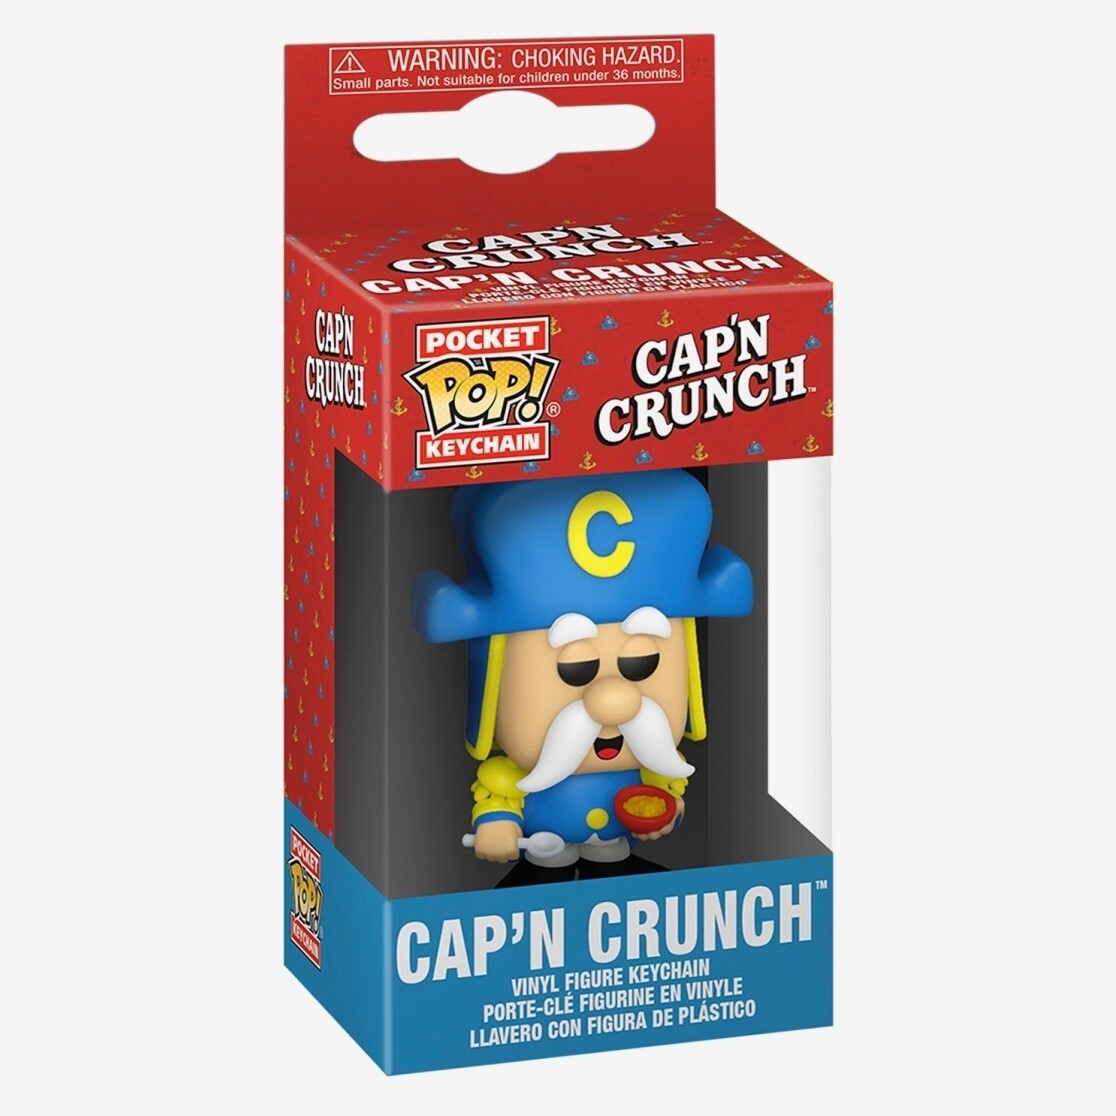 Cap'n Crunch Pocket POP! Keychain